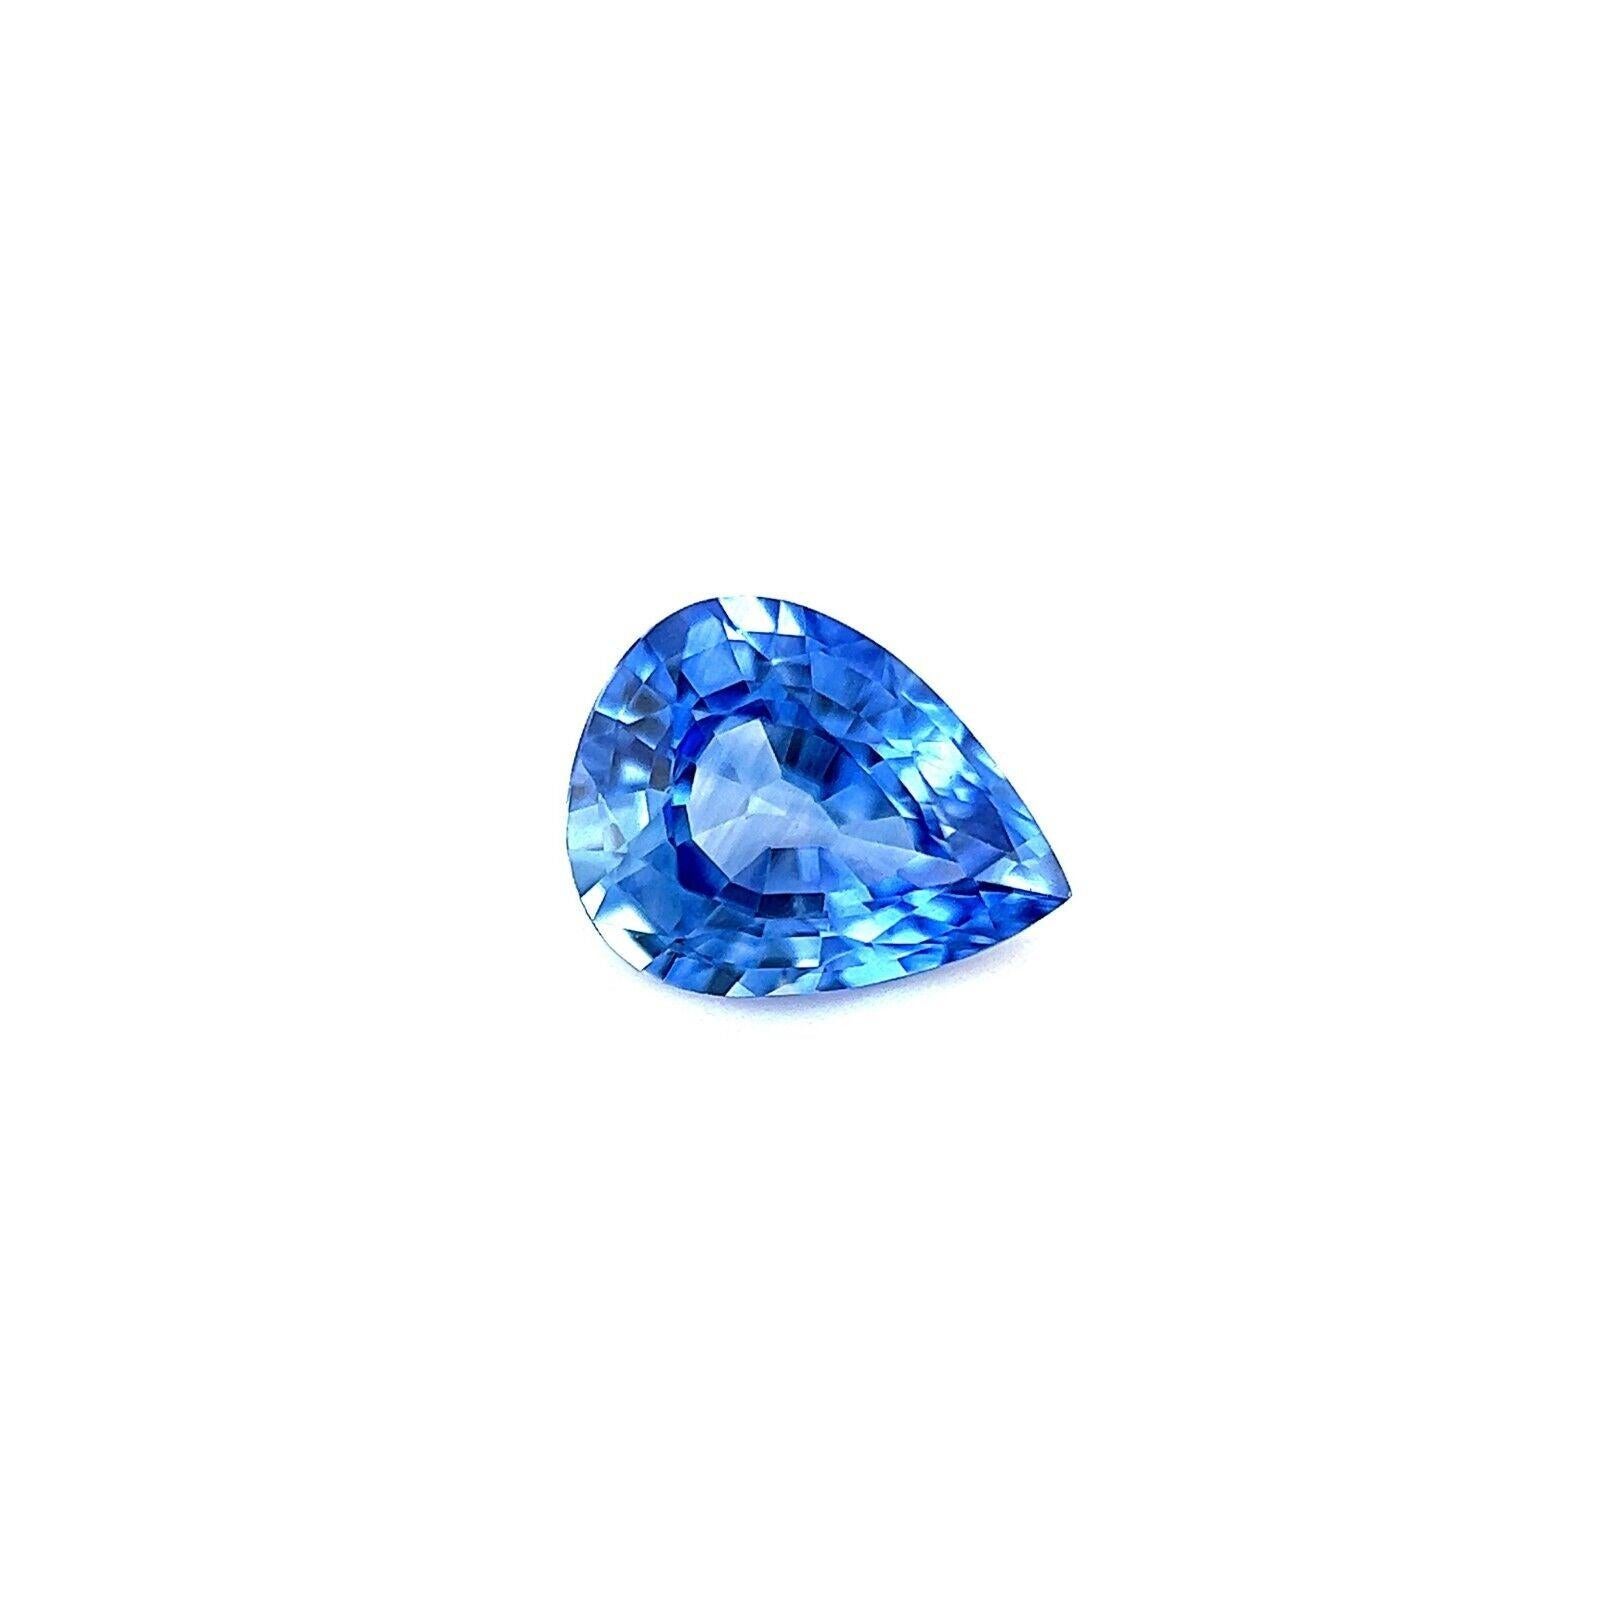 Fine 0.64ct Malibu Blue Ceylon Sapphire Pear Cut Rare Gemstone 6.2x4.8mm VVS

Fine Natural Malibu Blue Ceylon Sapphire Gemstone.
Rare sapphire with a fine vivid Malibu blue colour and excellent clarity, VVS. Also has an excellent pear teardrop cut.